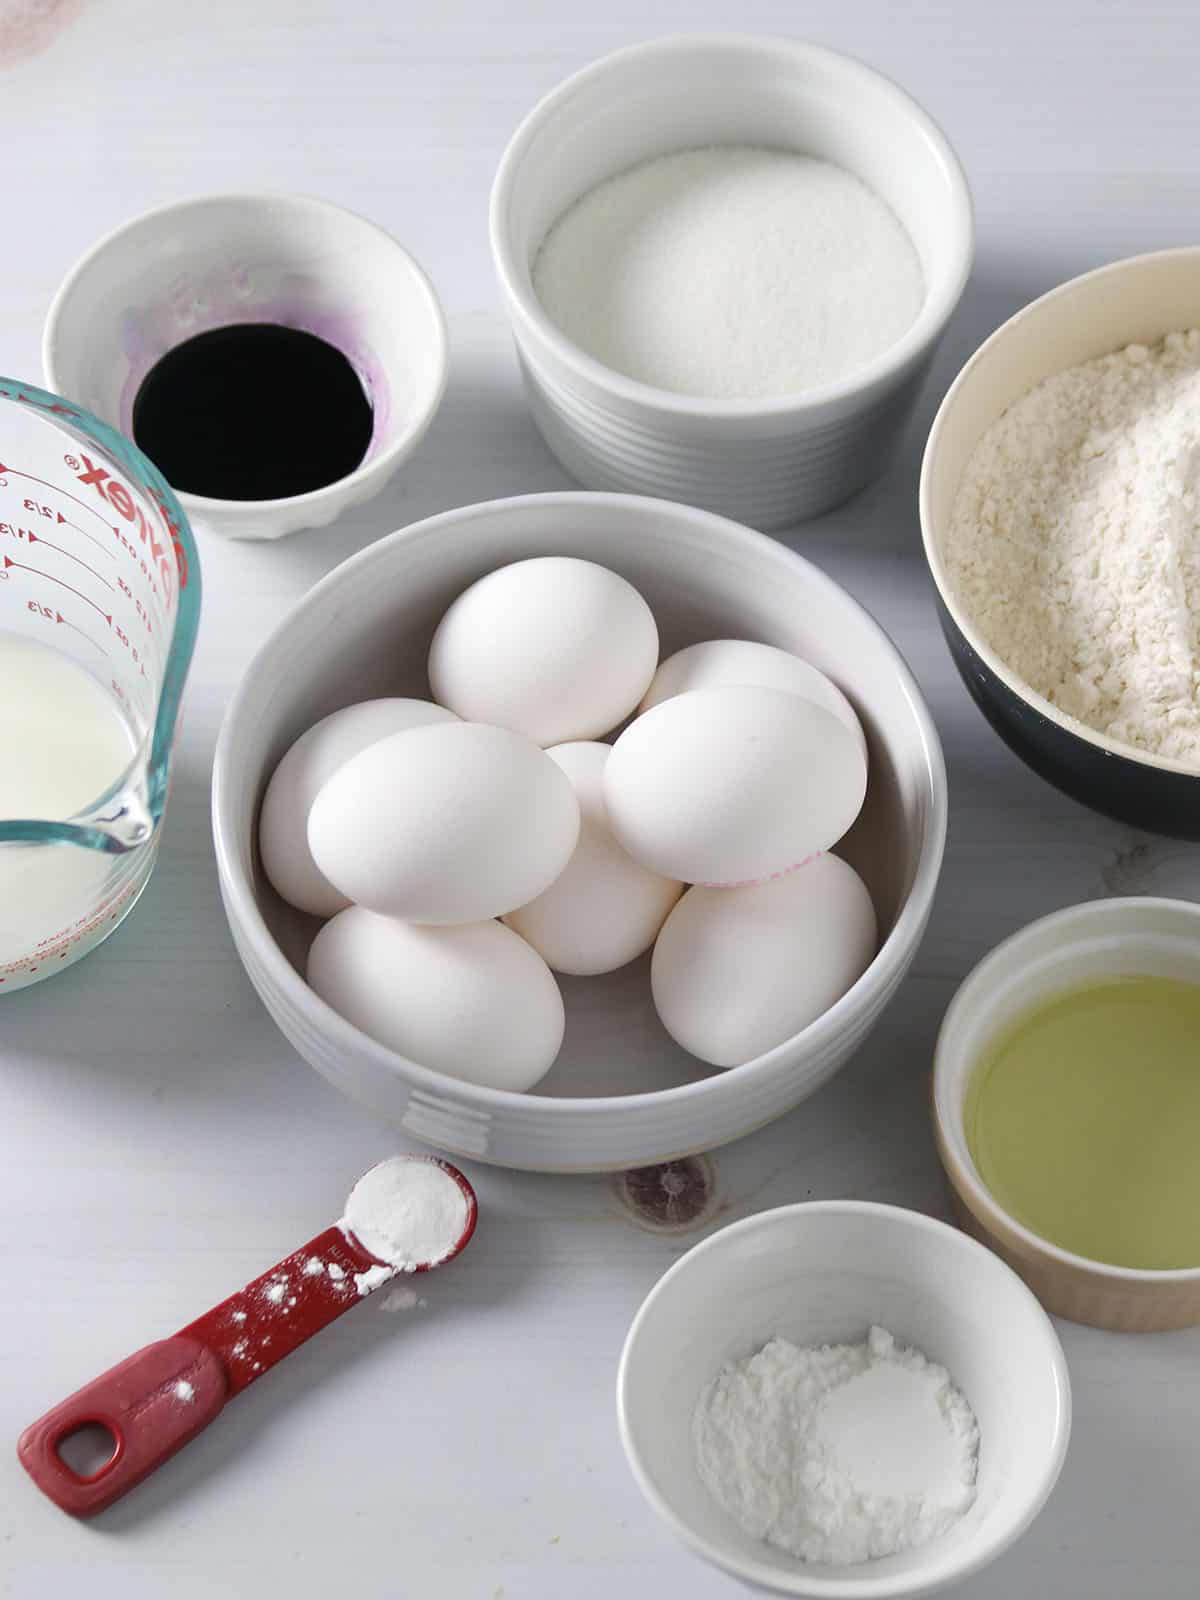 eggs, flour, milk, baking powder, sugar, cream of tartar, extract in bowls